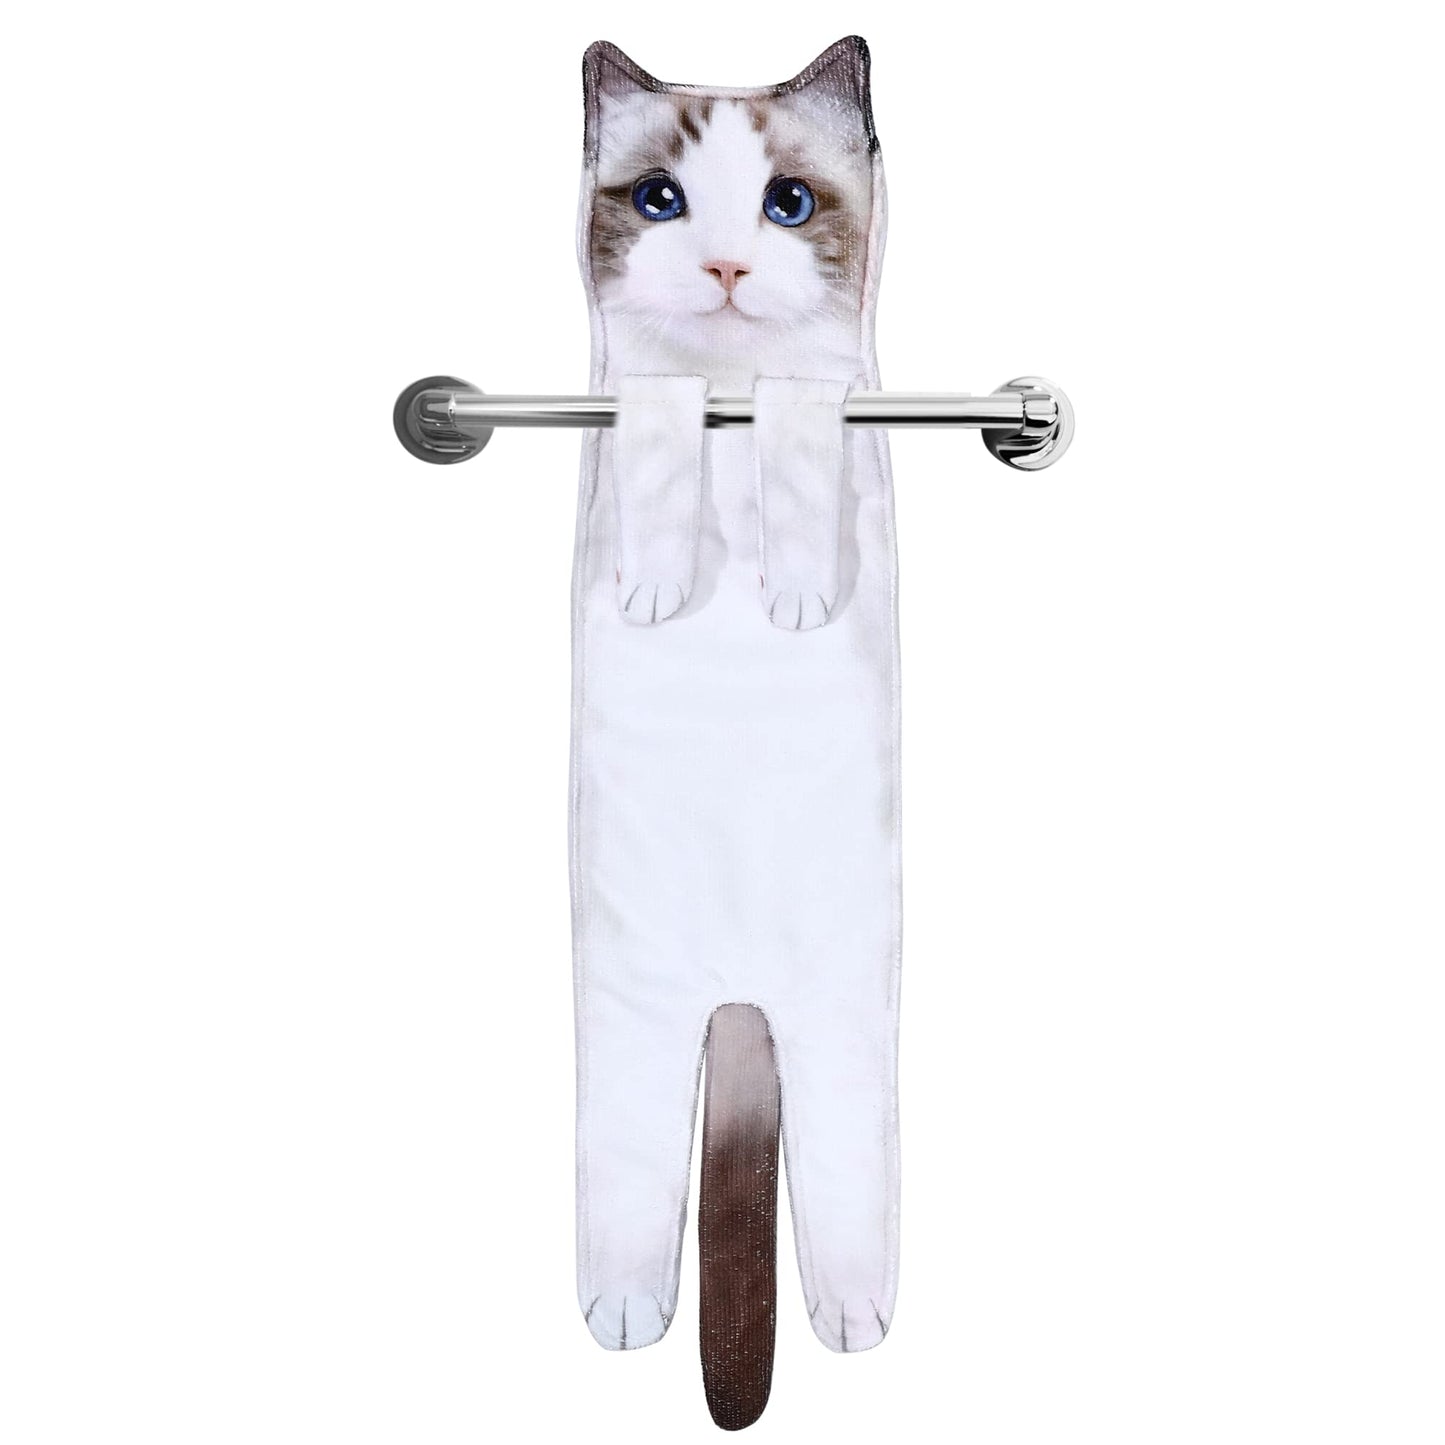 Cat Hand Towels - Cute Decorative